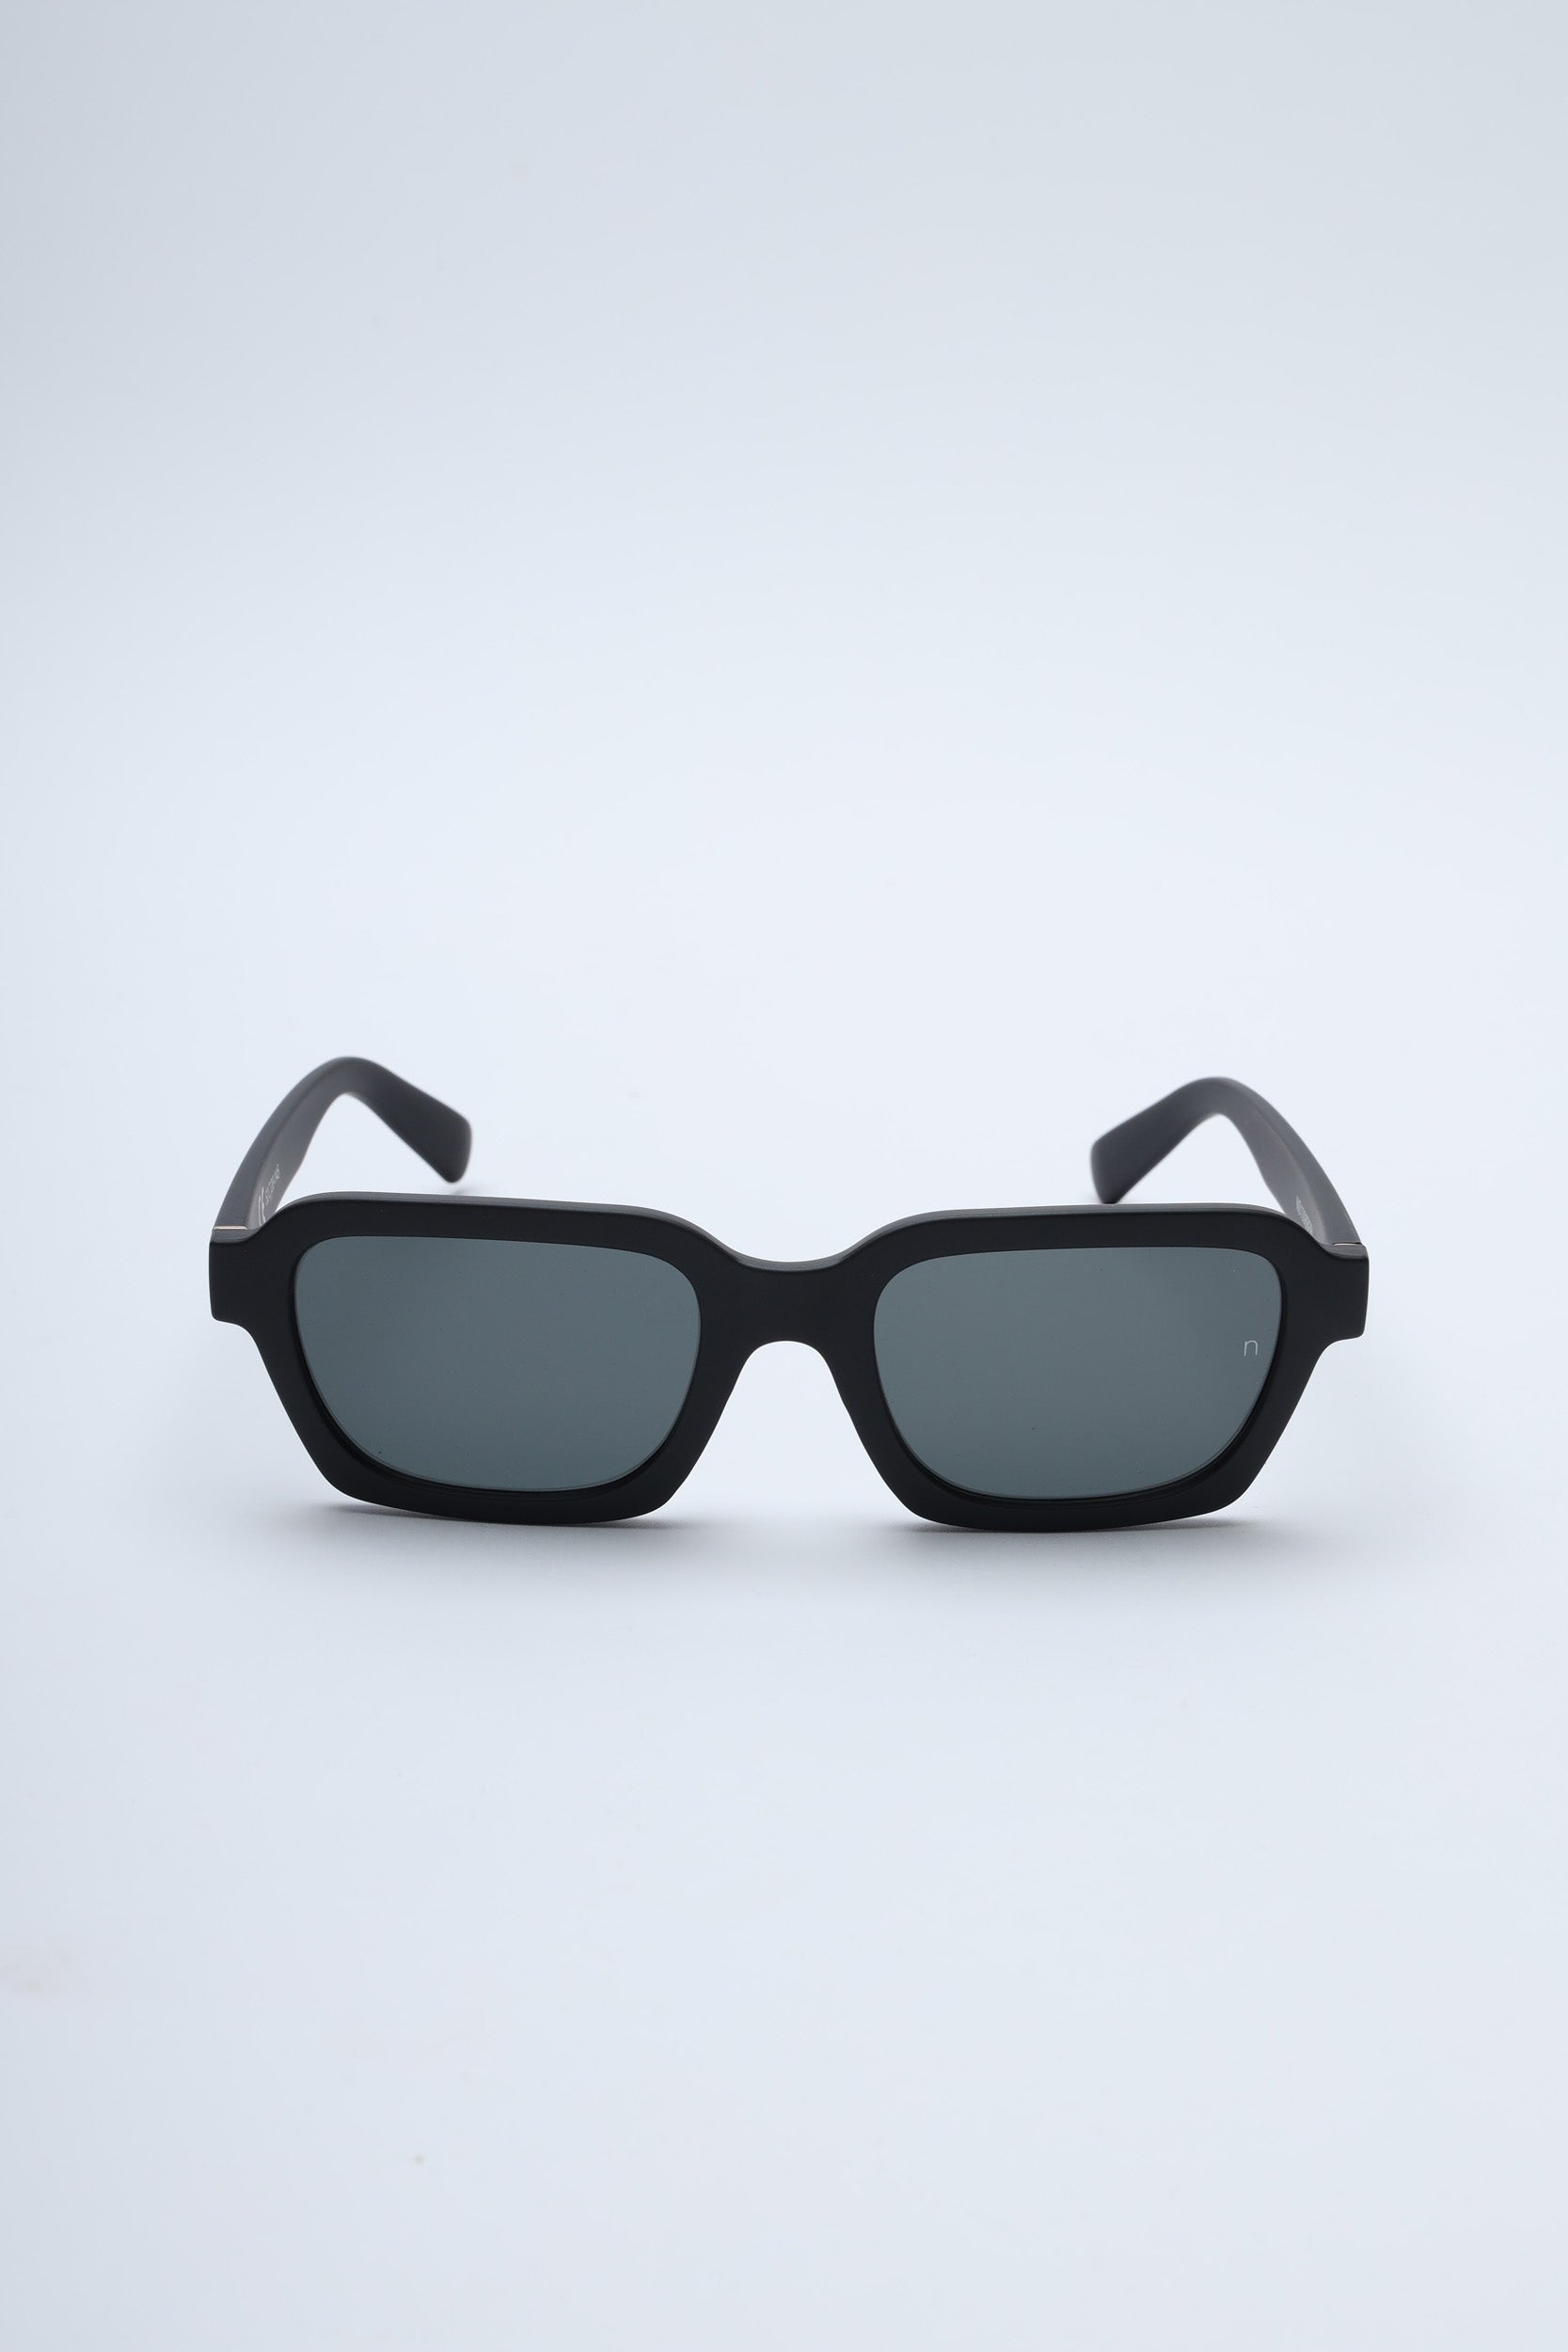 Louis Vuitton Cyclone Sunglasses Black Acetate & Metal. Size W